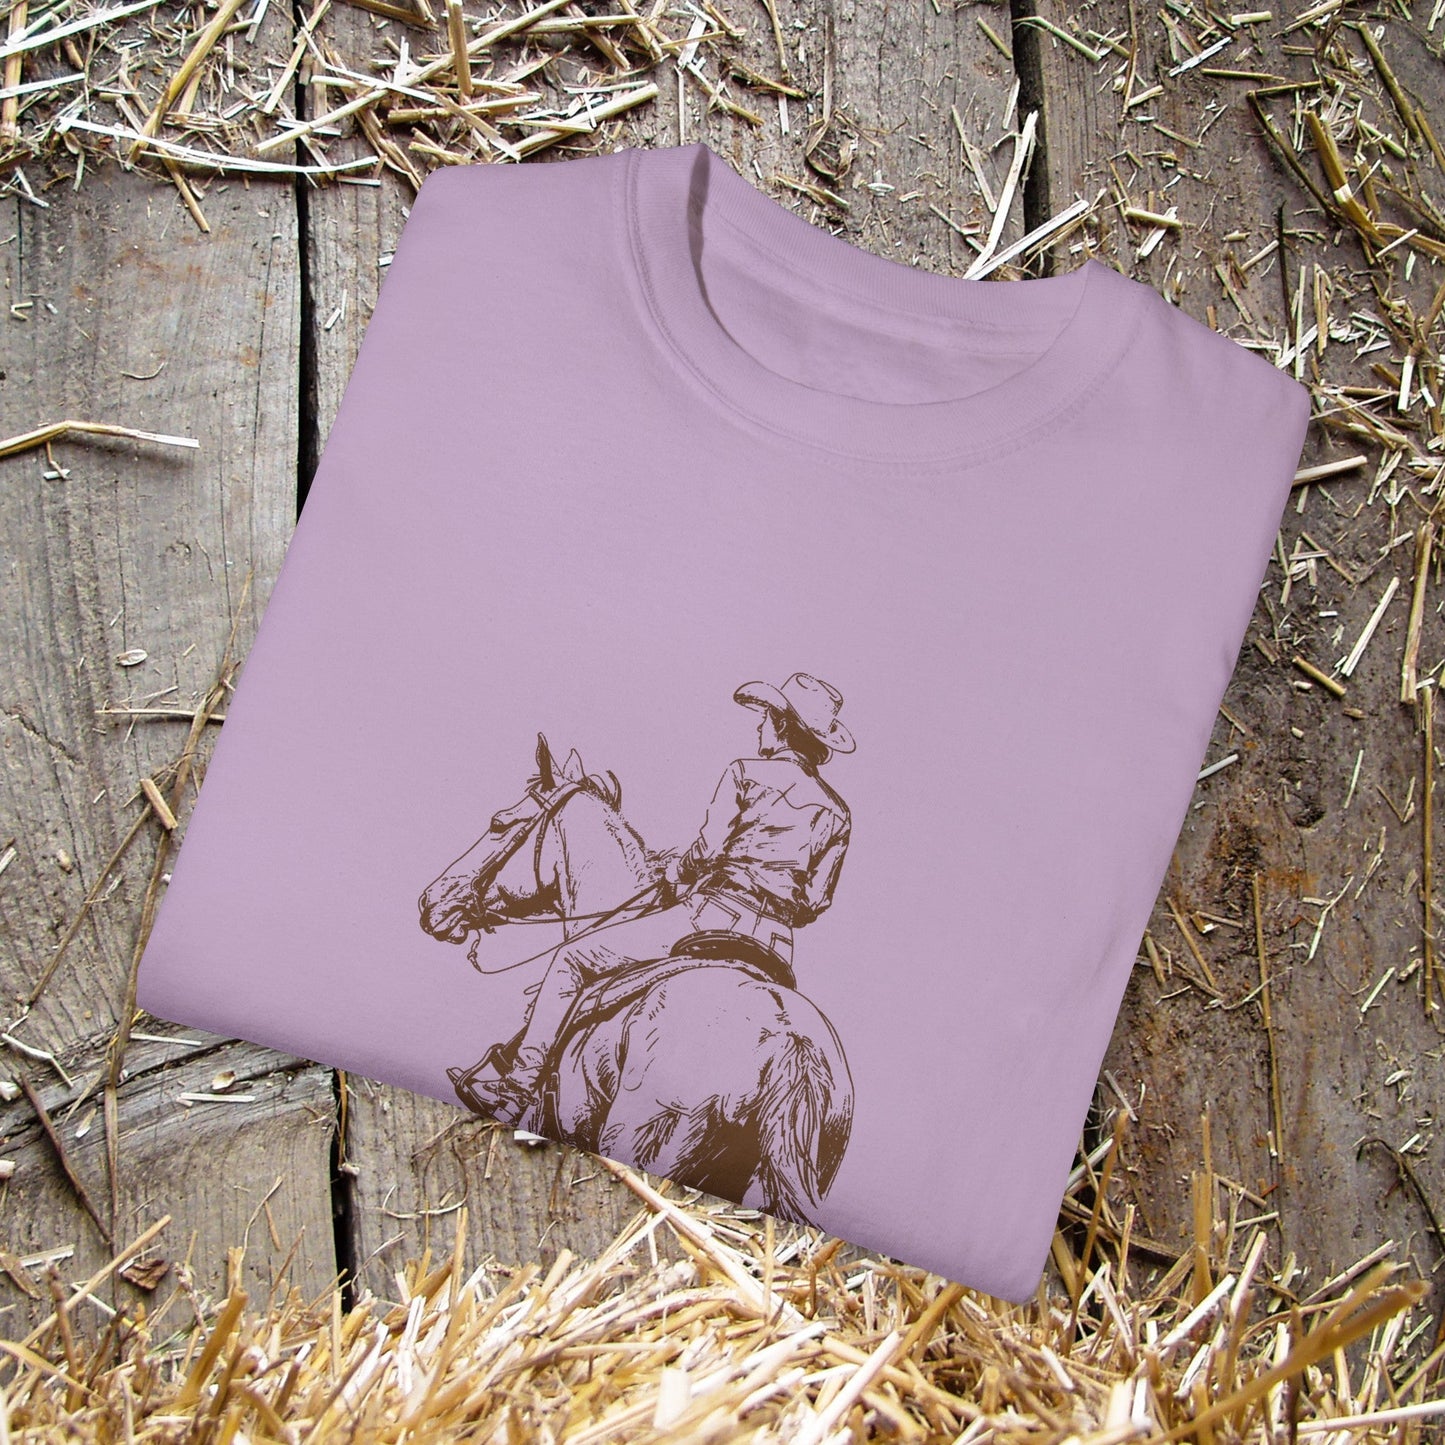 Comfort Color Horse Shirt, New Horse Drawing, "Country Life" Horse Art Tee, Horse Lover Shirt - FlooredByArt